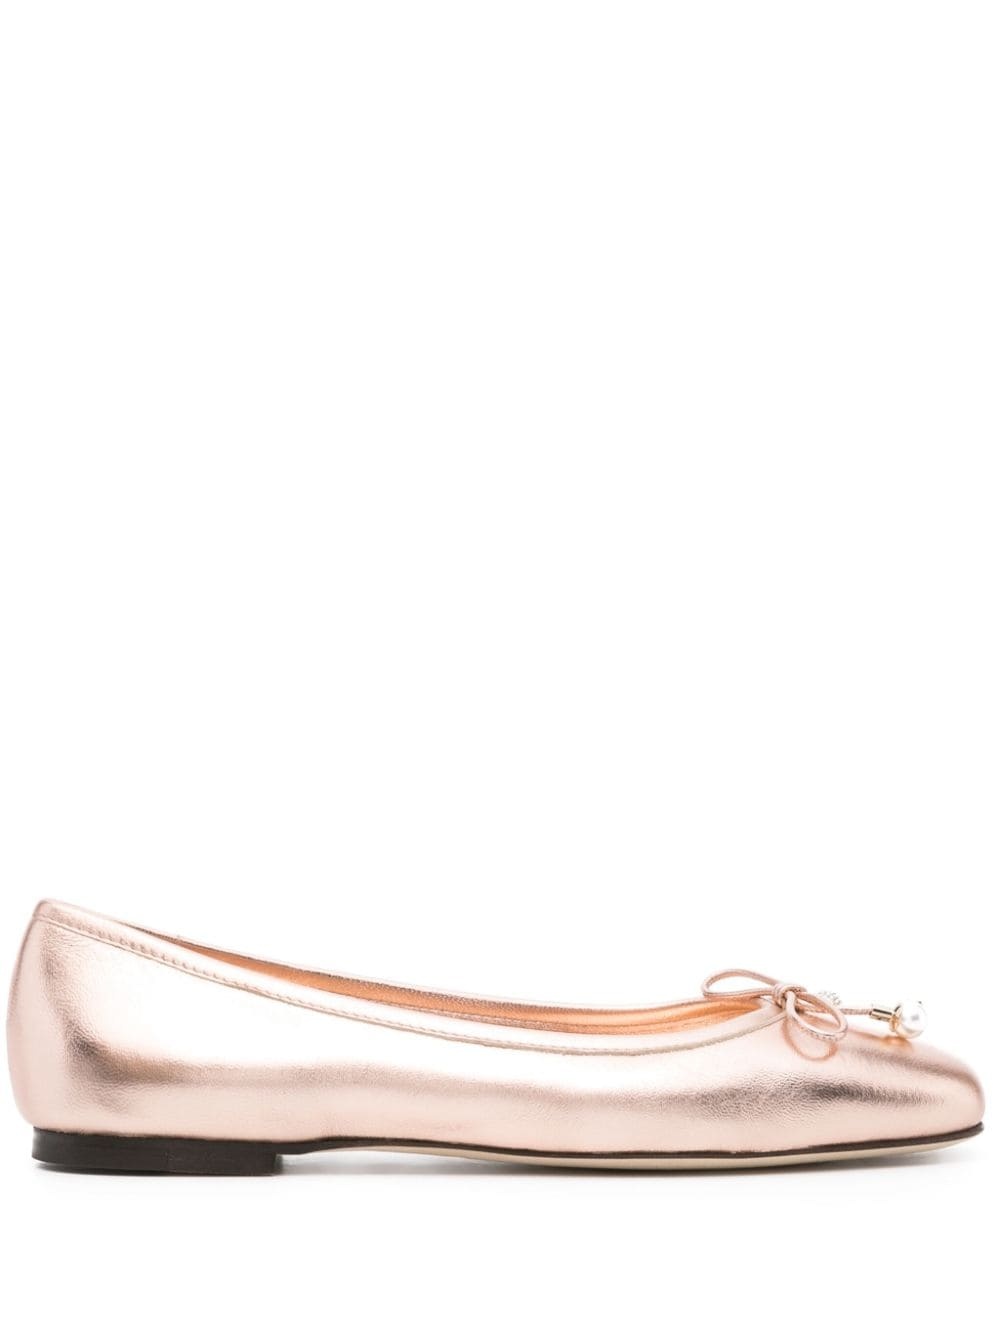 Elme metallic ballerina shoes - 1